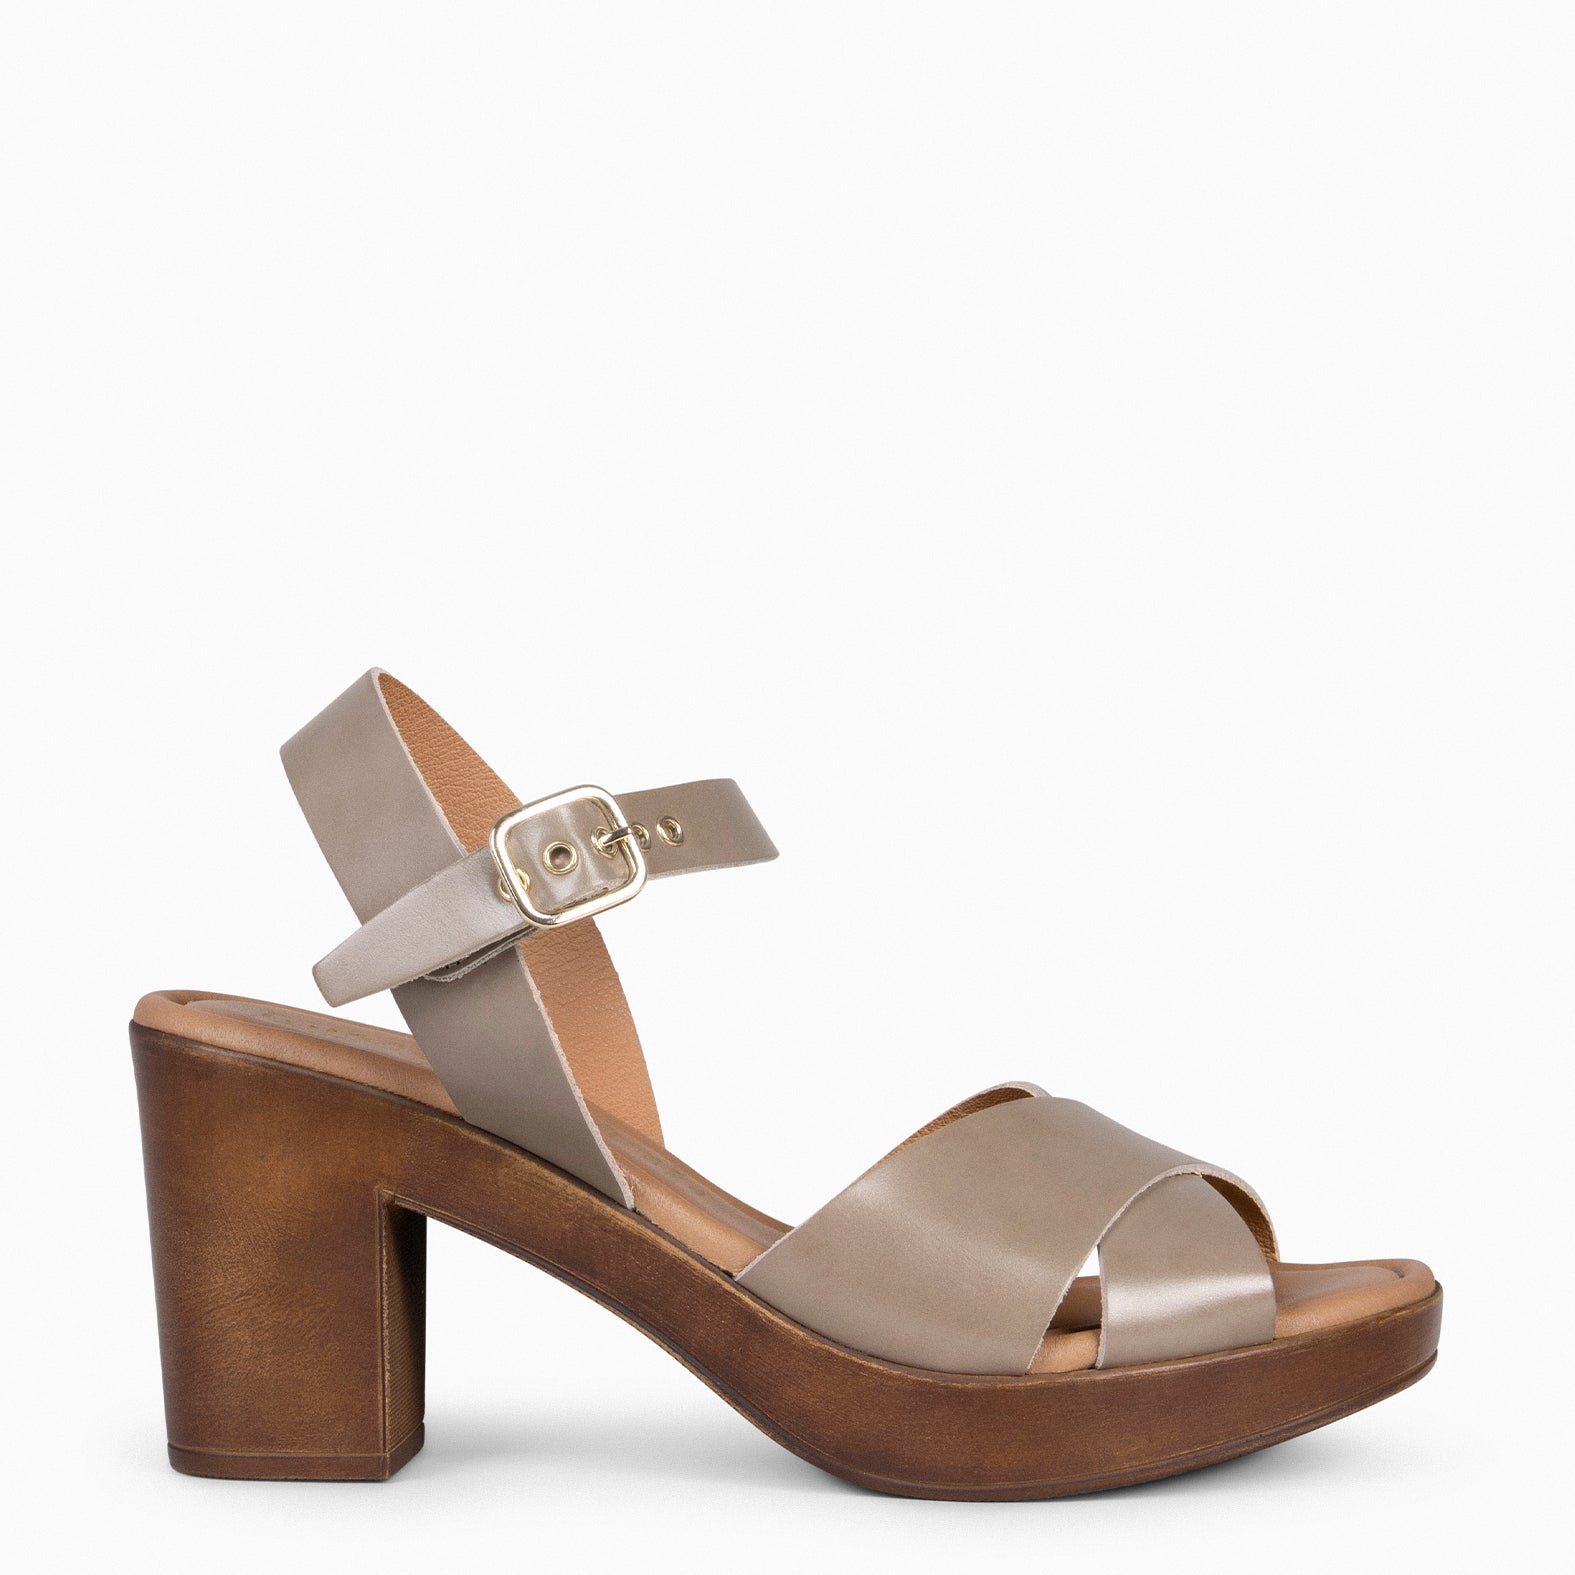 TAVIRA – TAUPE wide-heeled sandal